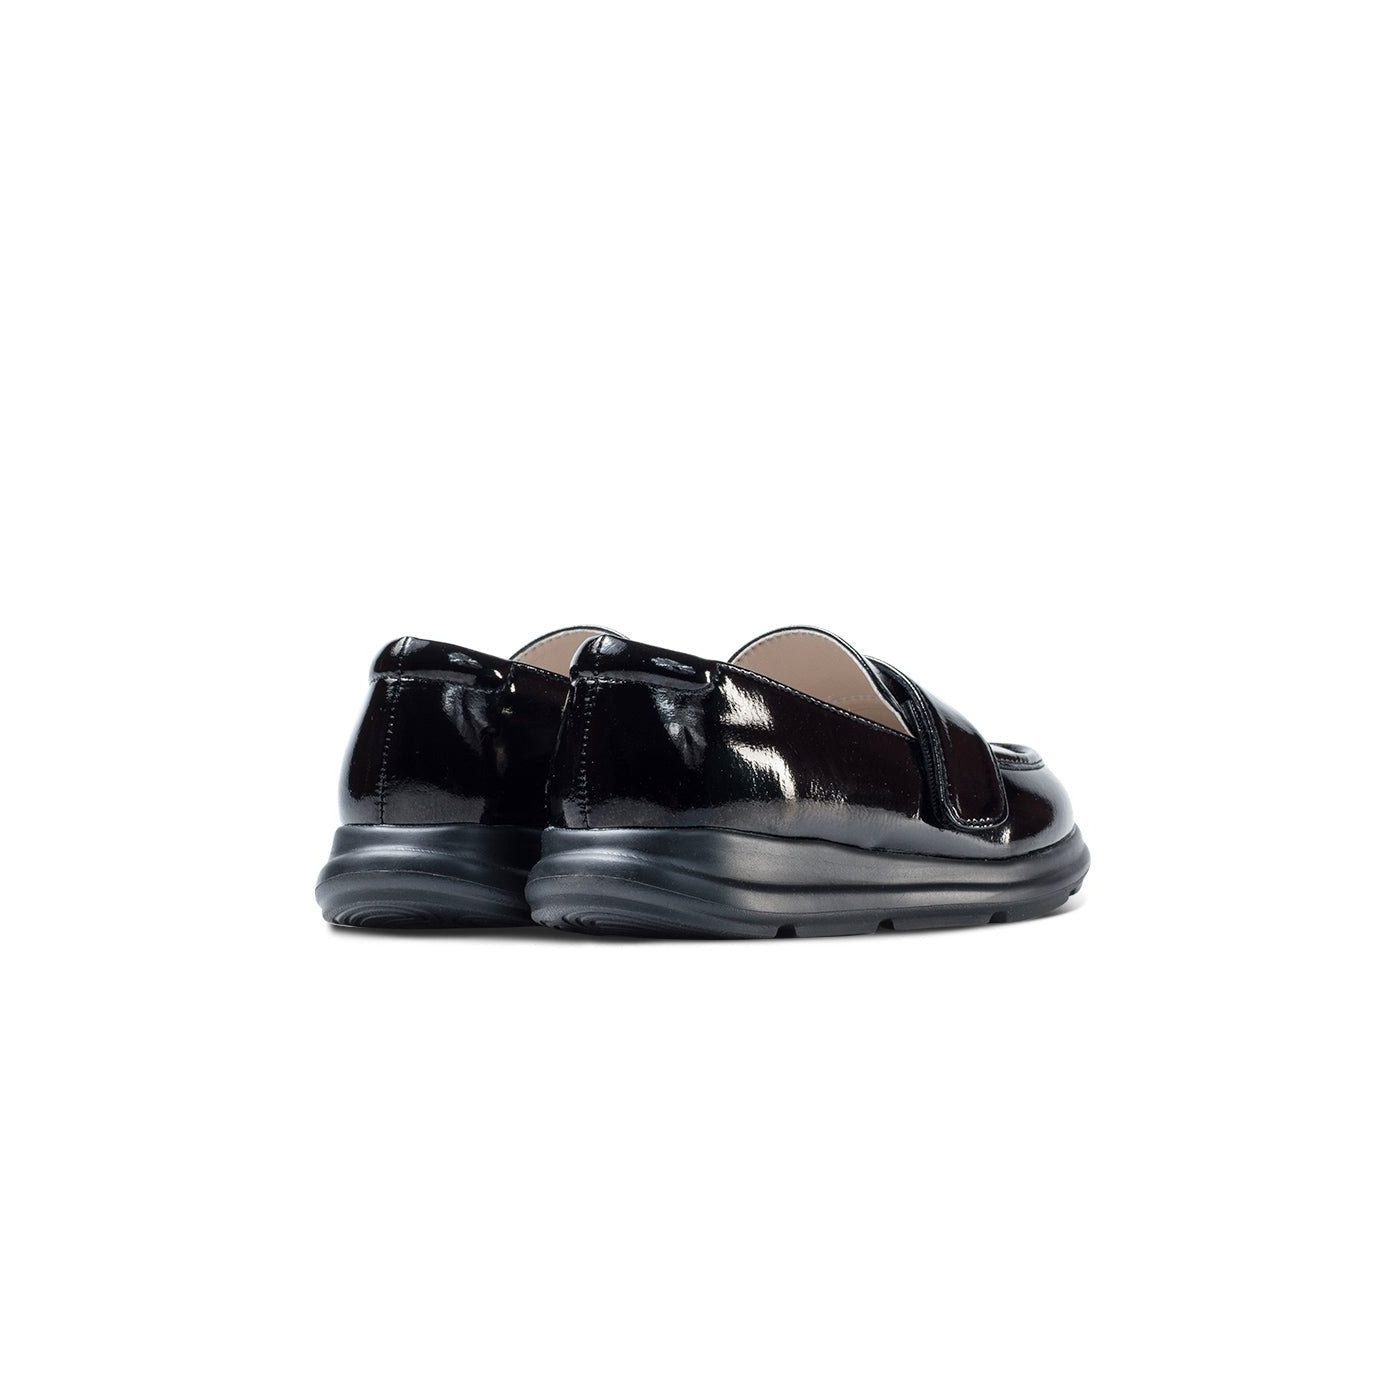 Glory Lightweight Kids Patent Black Loafers - 0cm